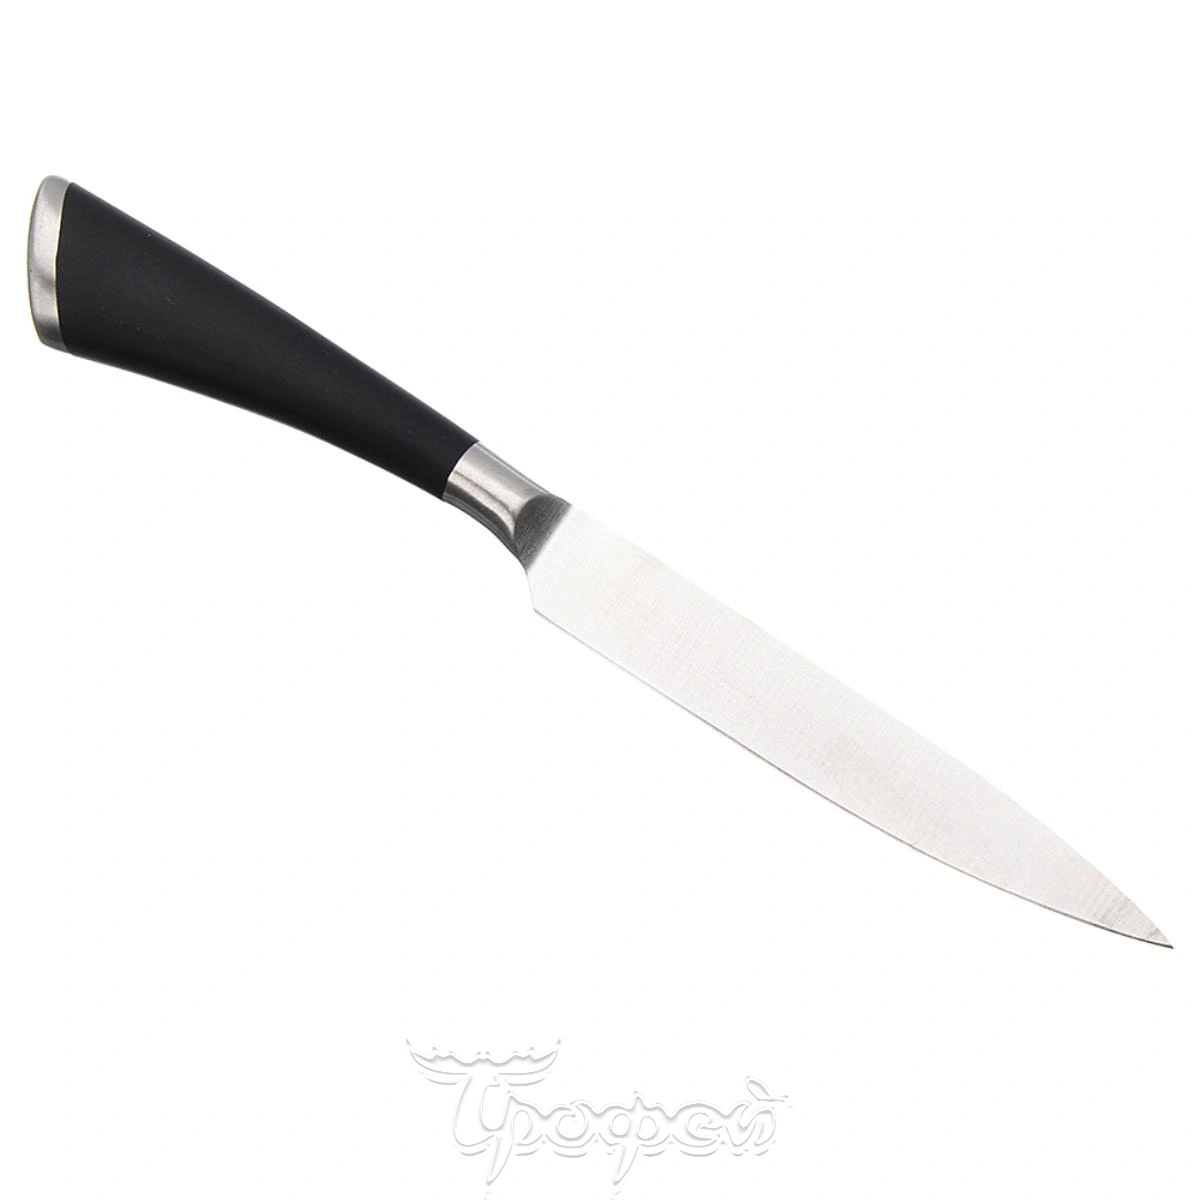 Кухонные ножи 20 см. Satoshi Акита нож кухонный универсальный 20см. Satoshi Акита нож кухонный универсальный 20см 803-030. Satoshi Акита нож кухонный универсальный 11см. Satoshi премьер нож кухонный шеф 20см.